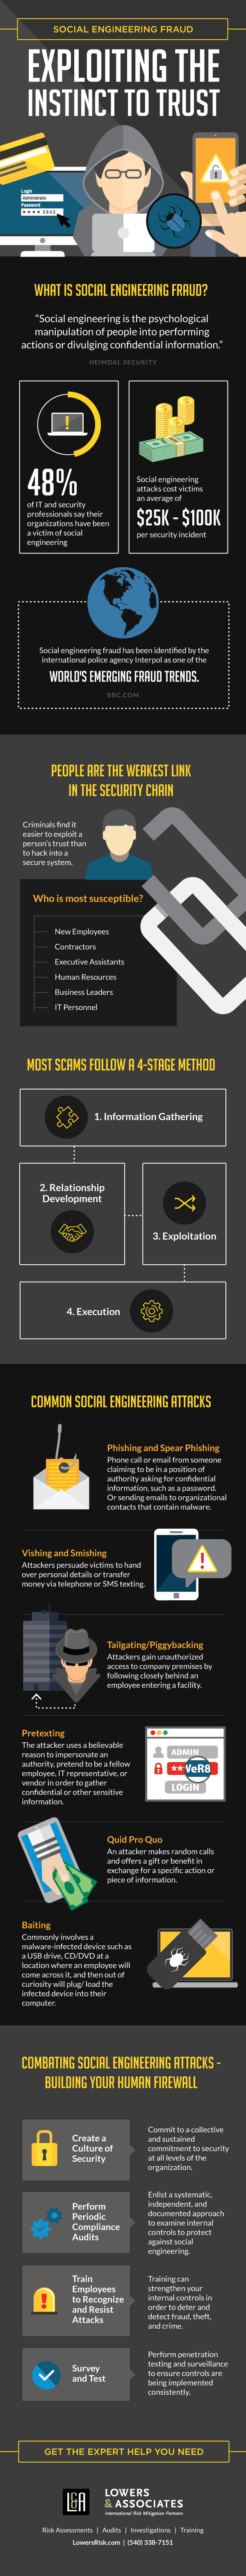 social-engineering-fraud-infographic